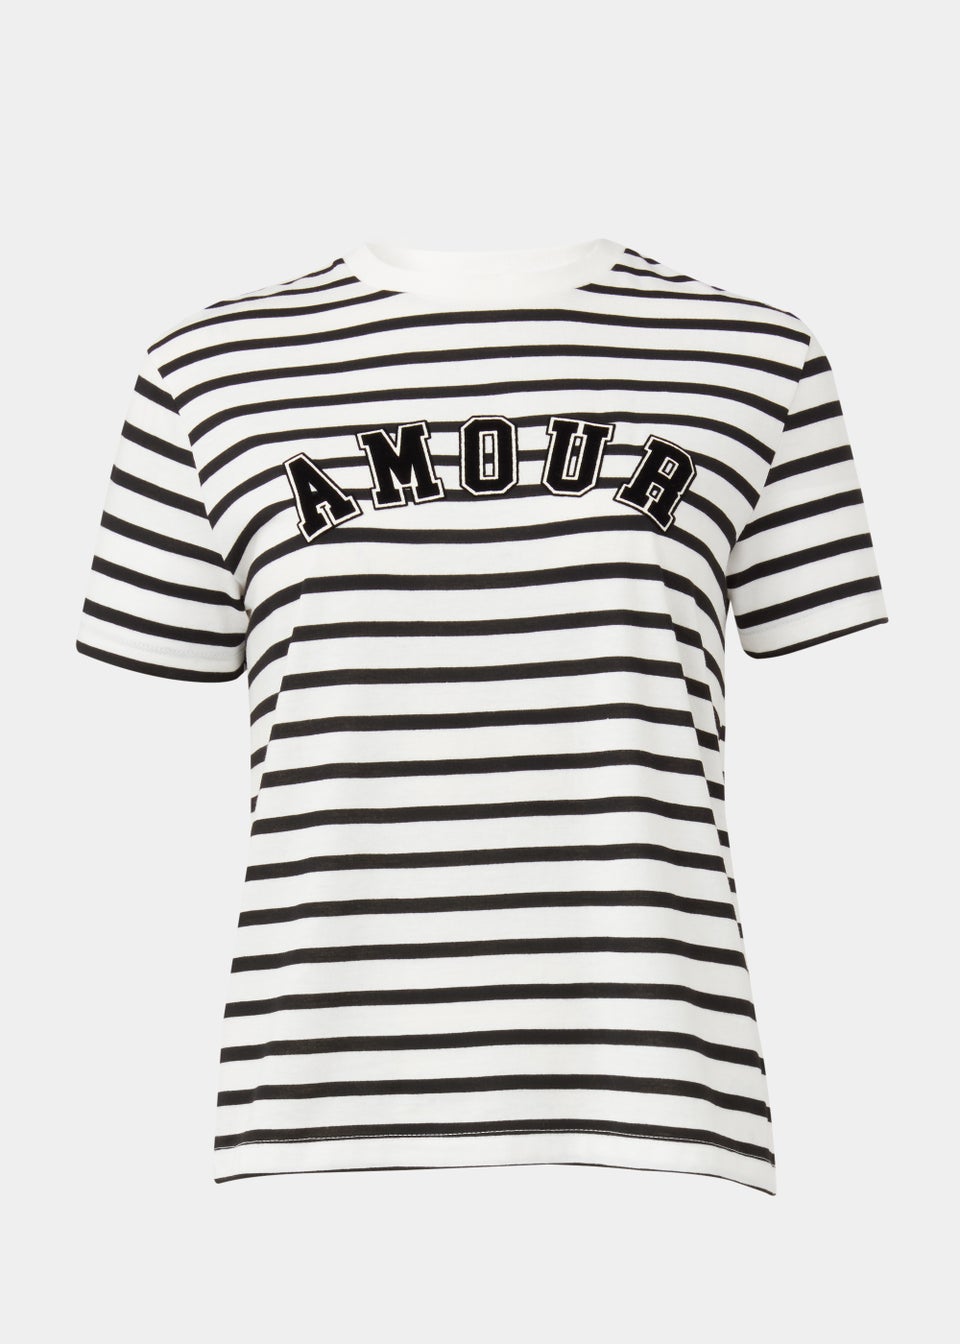 Black & White Stripe Amore Print T-Shirt